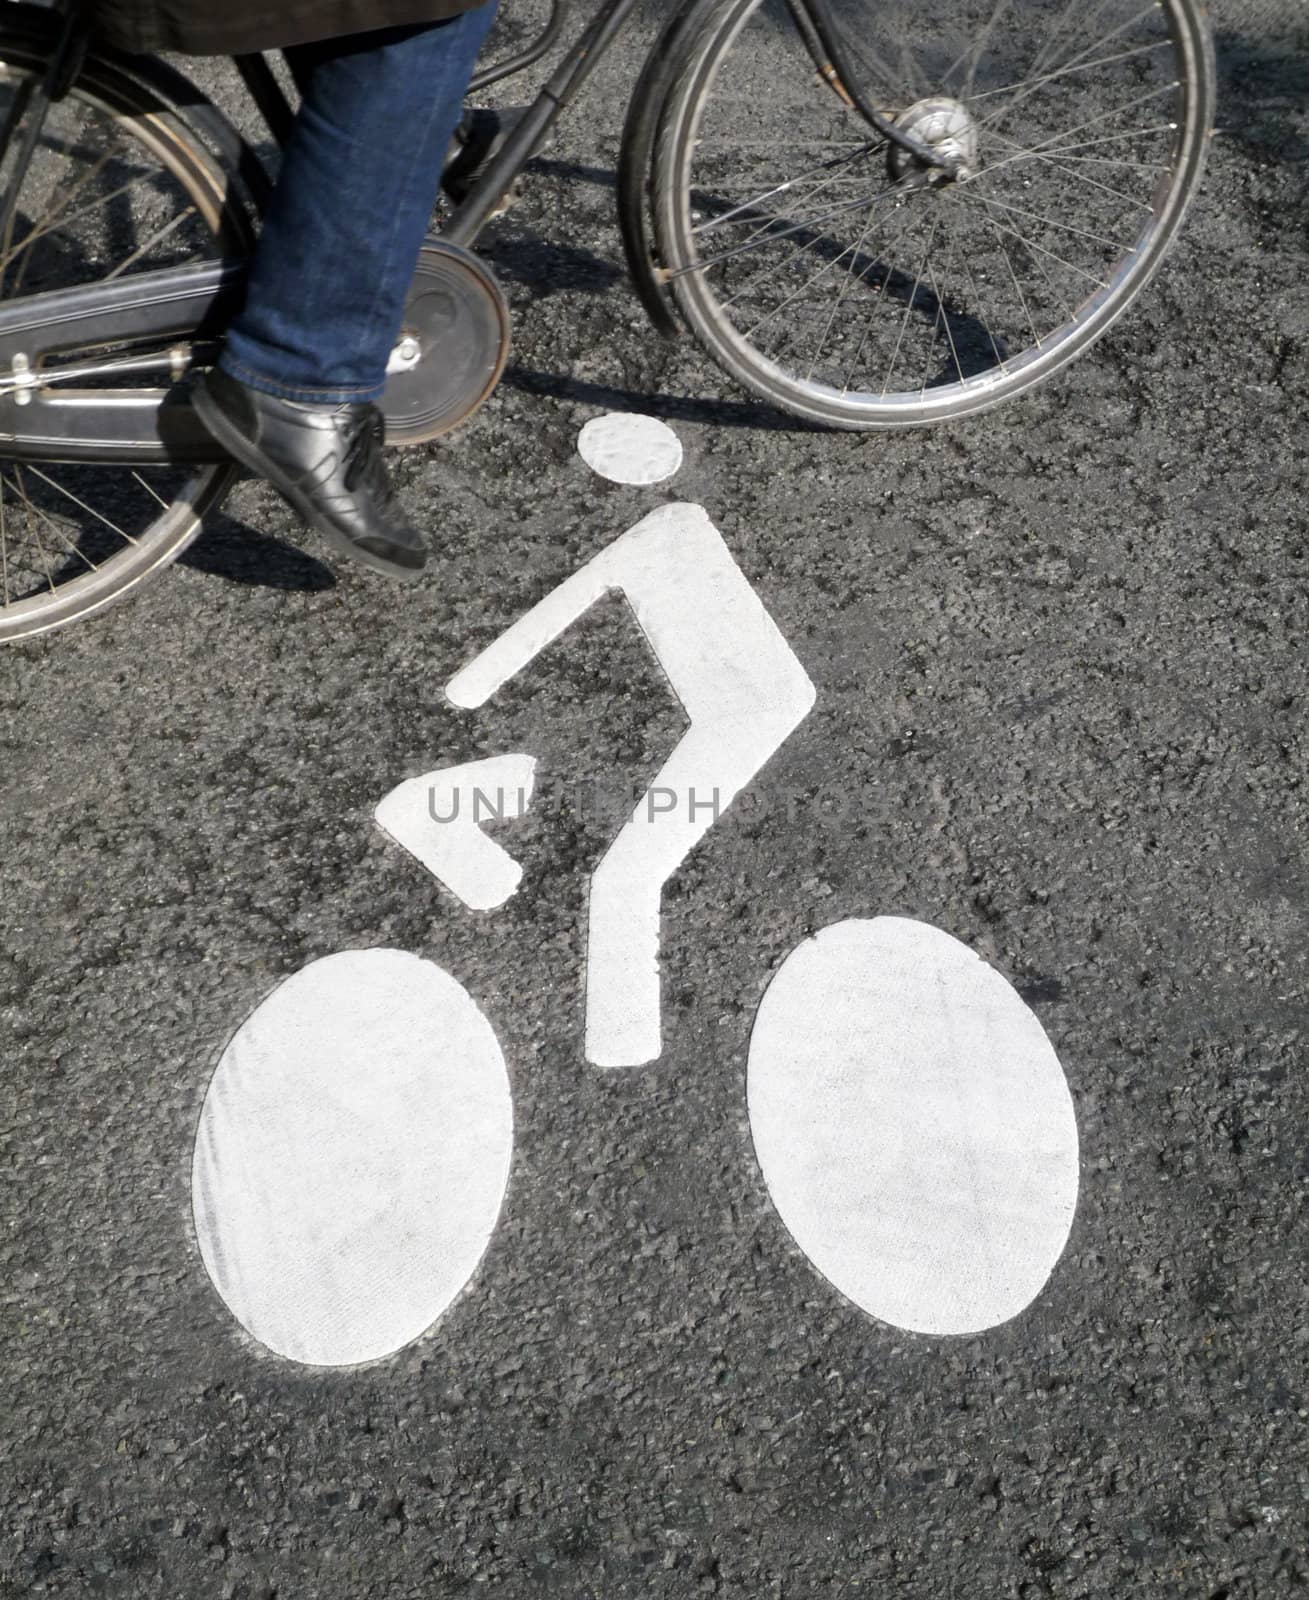 Bicycle lane by dutourdumonde